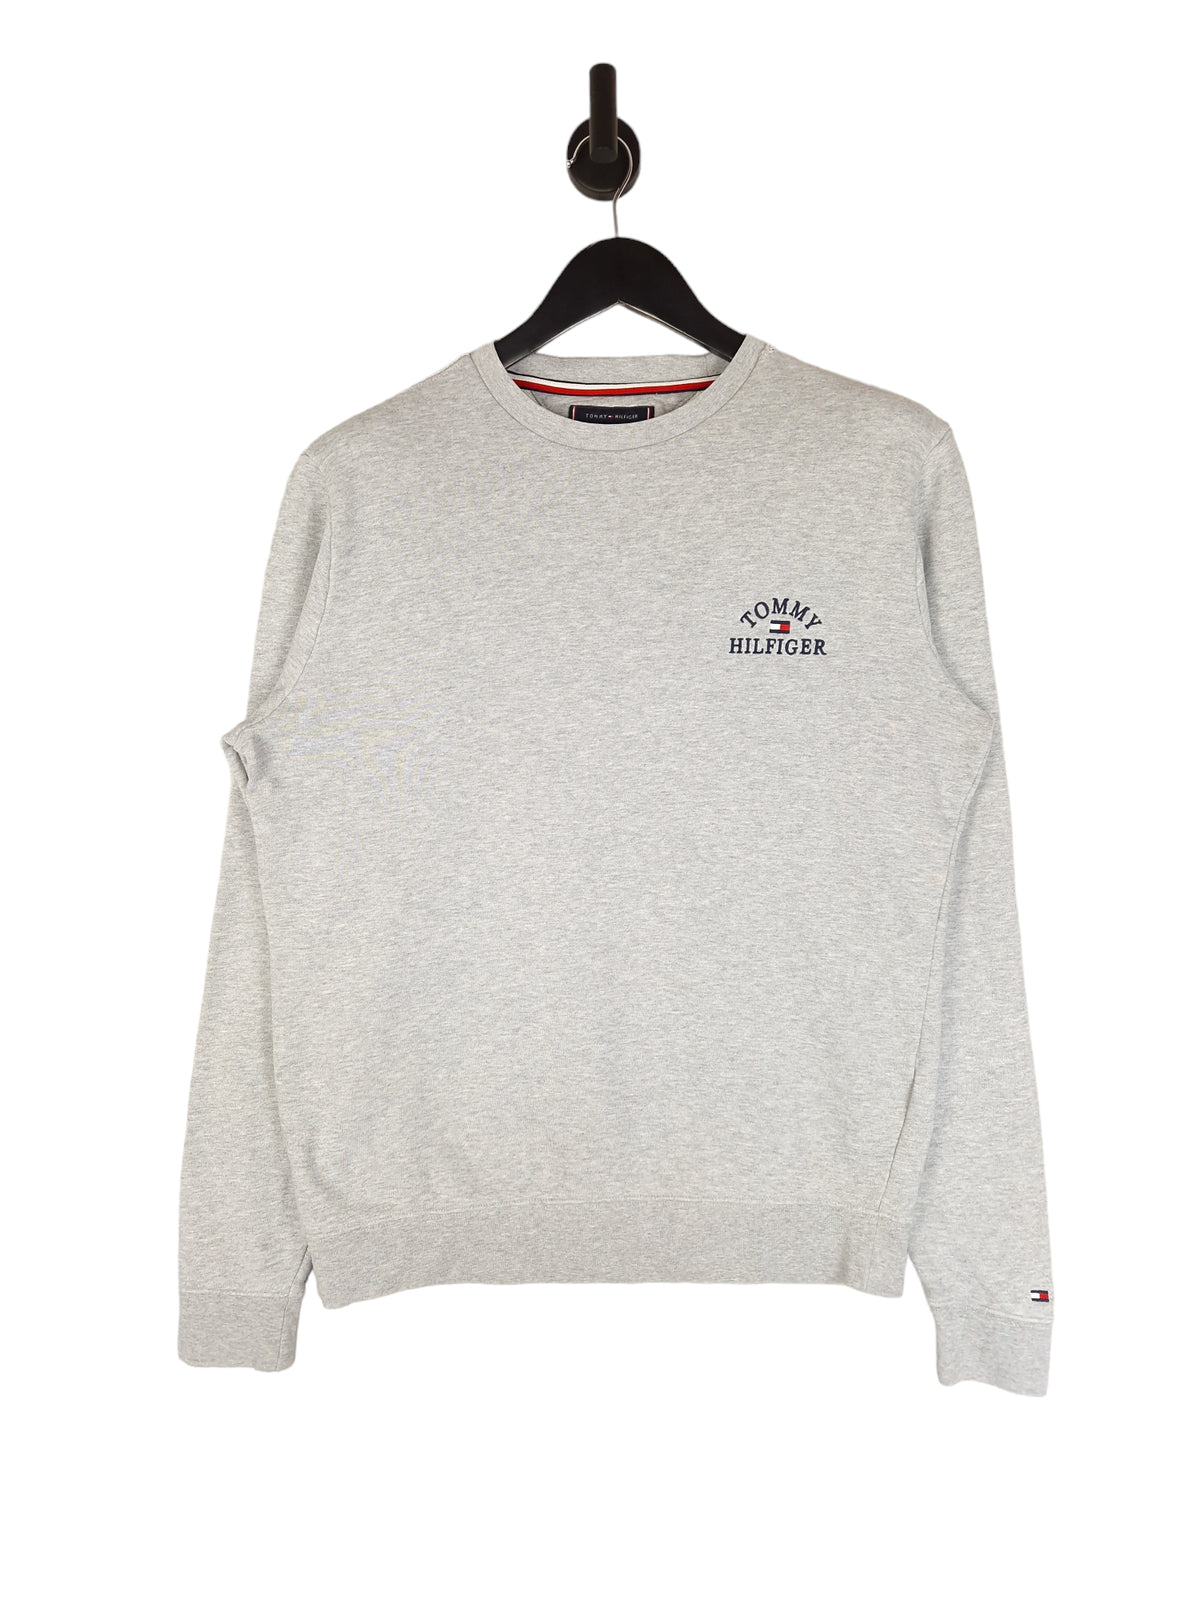 Tommy Hilfiger Small Logo Sweatshirt - Size Medium